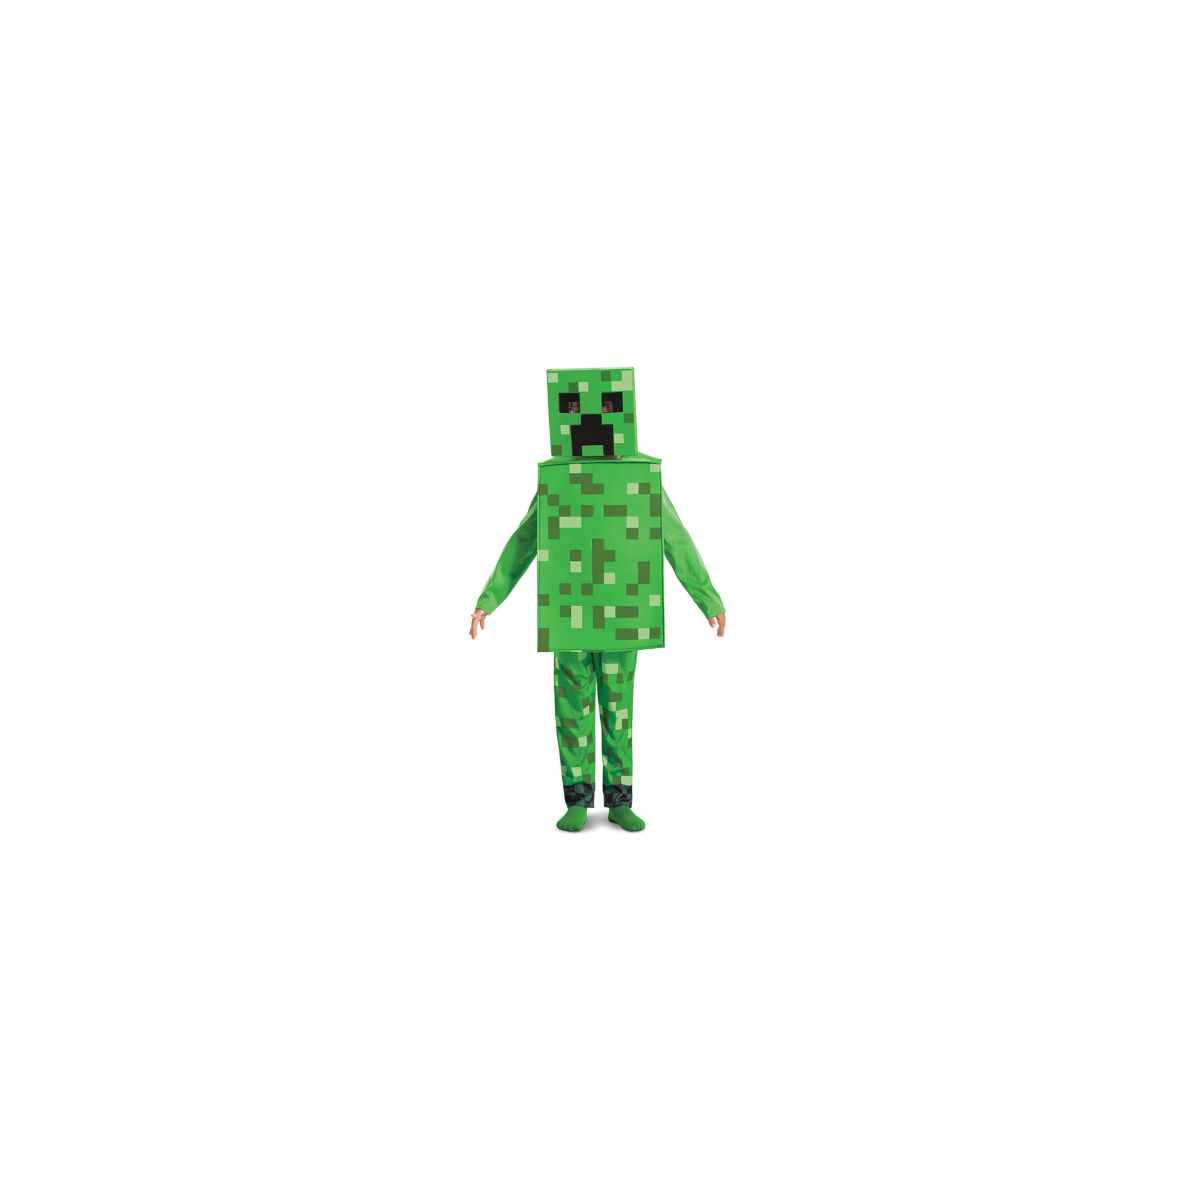 Kostium Creeper Fancy - Minecraft (licencja), rozm. S (4-6 lat) Godan (115779L)